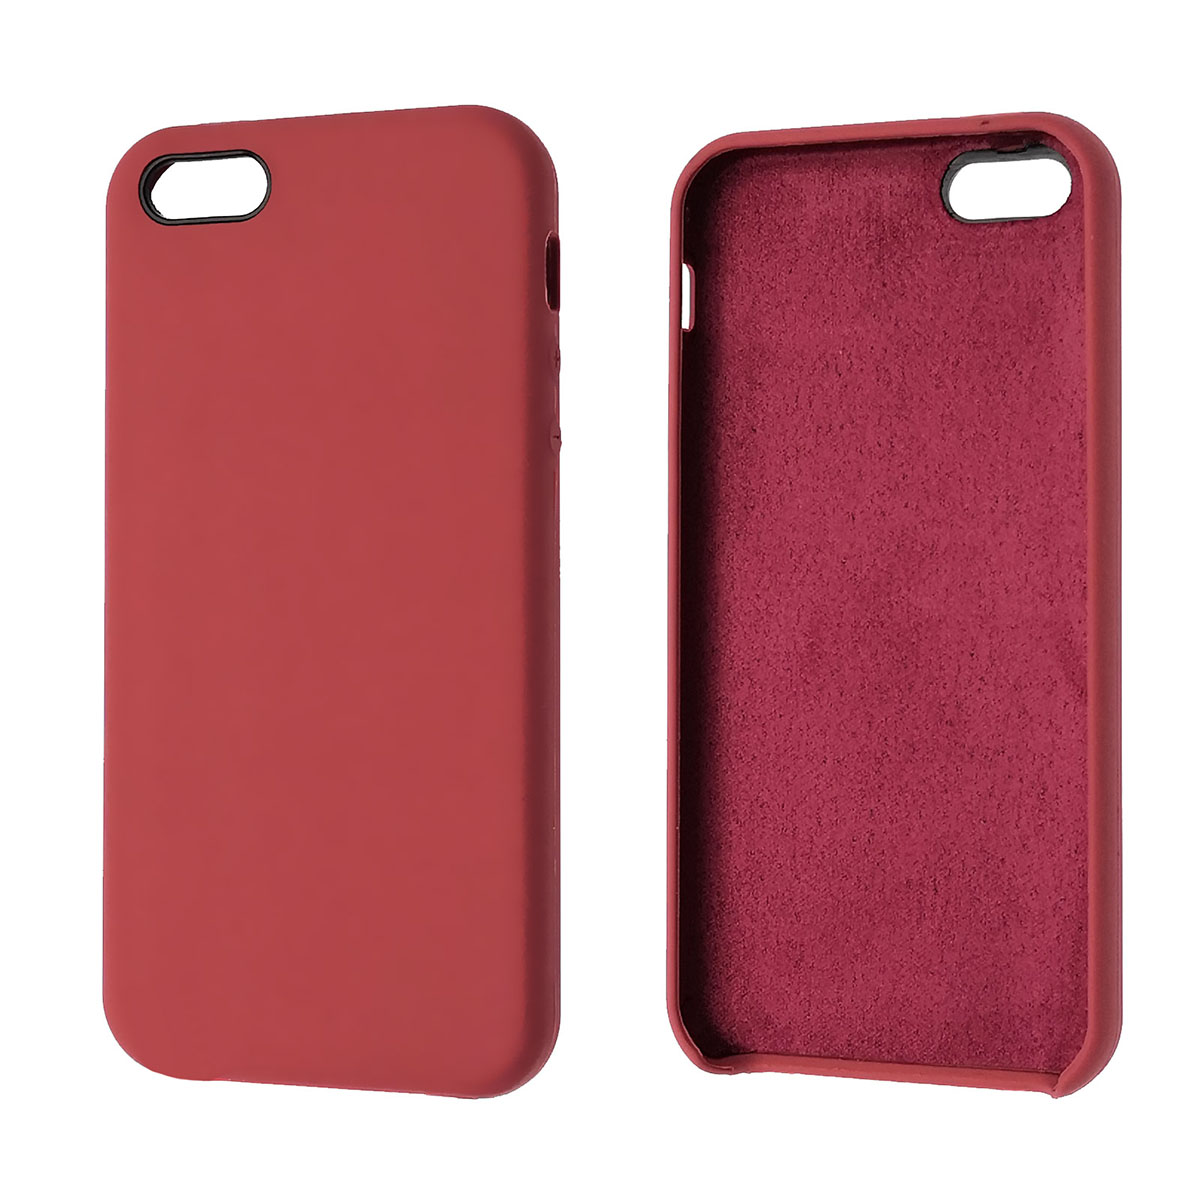 Чехол накладка Silicon Case для APPLE iPhone 5, iPhone 5S, iPhone SE, силикон, бархат, цвет темно розовый